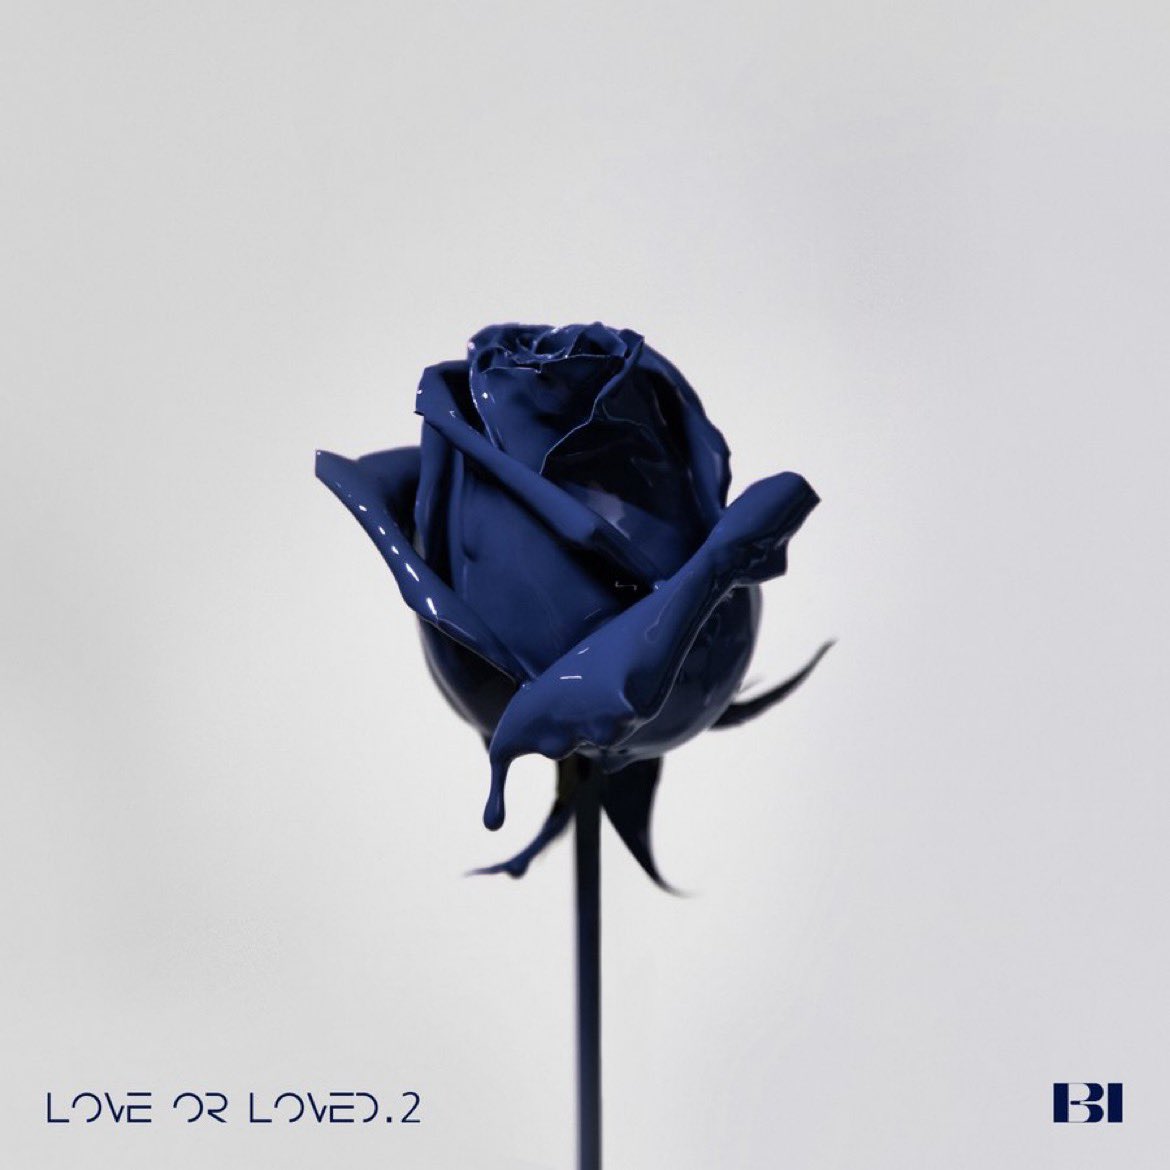 B.I GLOBAL EP <Love or Loved Part.2>

STREAM NOW ON : bi.ffm.to/loveorlovedpt2

OUT NOW

#BI #ビーアイ #비아이 #LoveOrLoved_Pt2 #BI_Loved #131LABEL